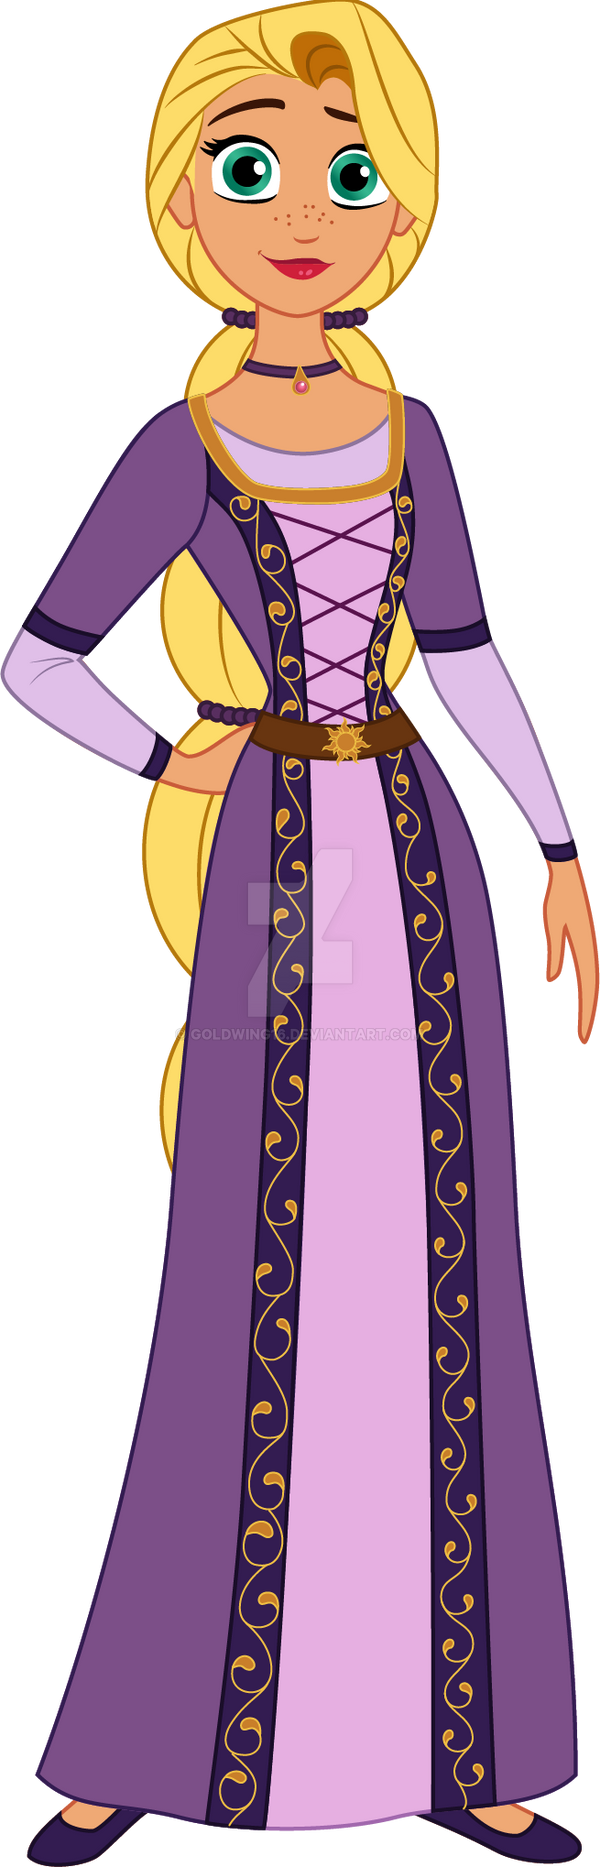 Tangled Series Challenge: Princess Rapunzel by Goldwing16 on DeviantArt